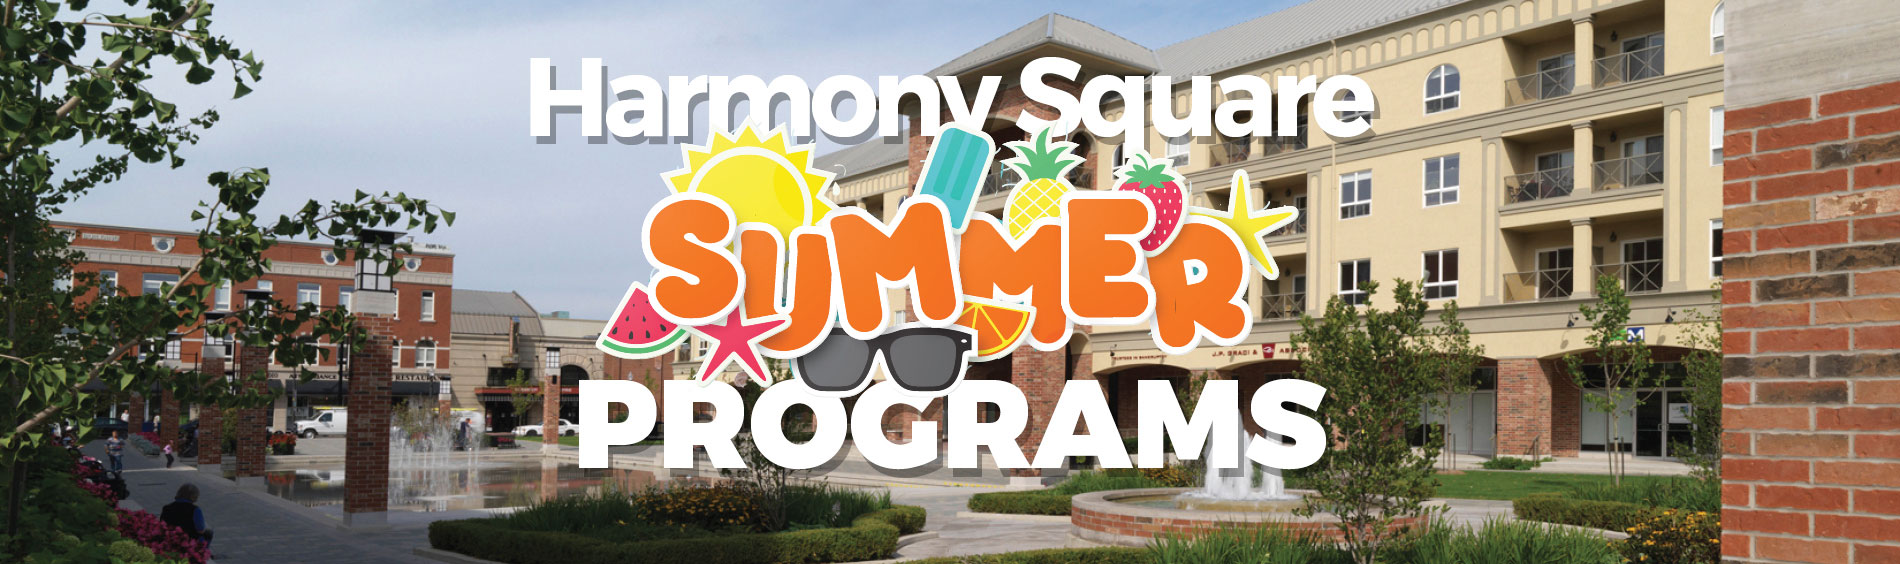 Harmony Square Summer Programs